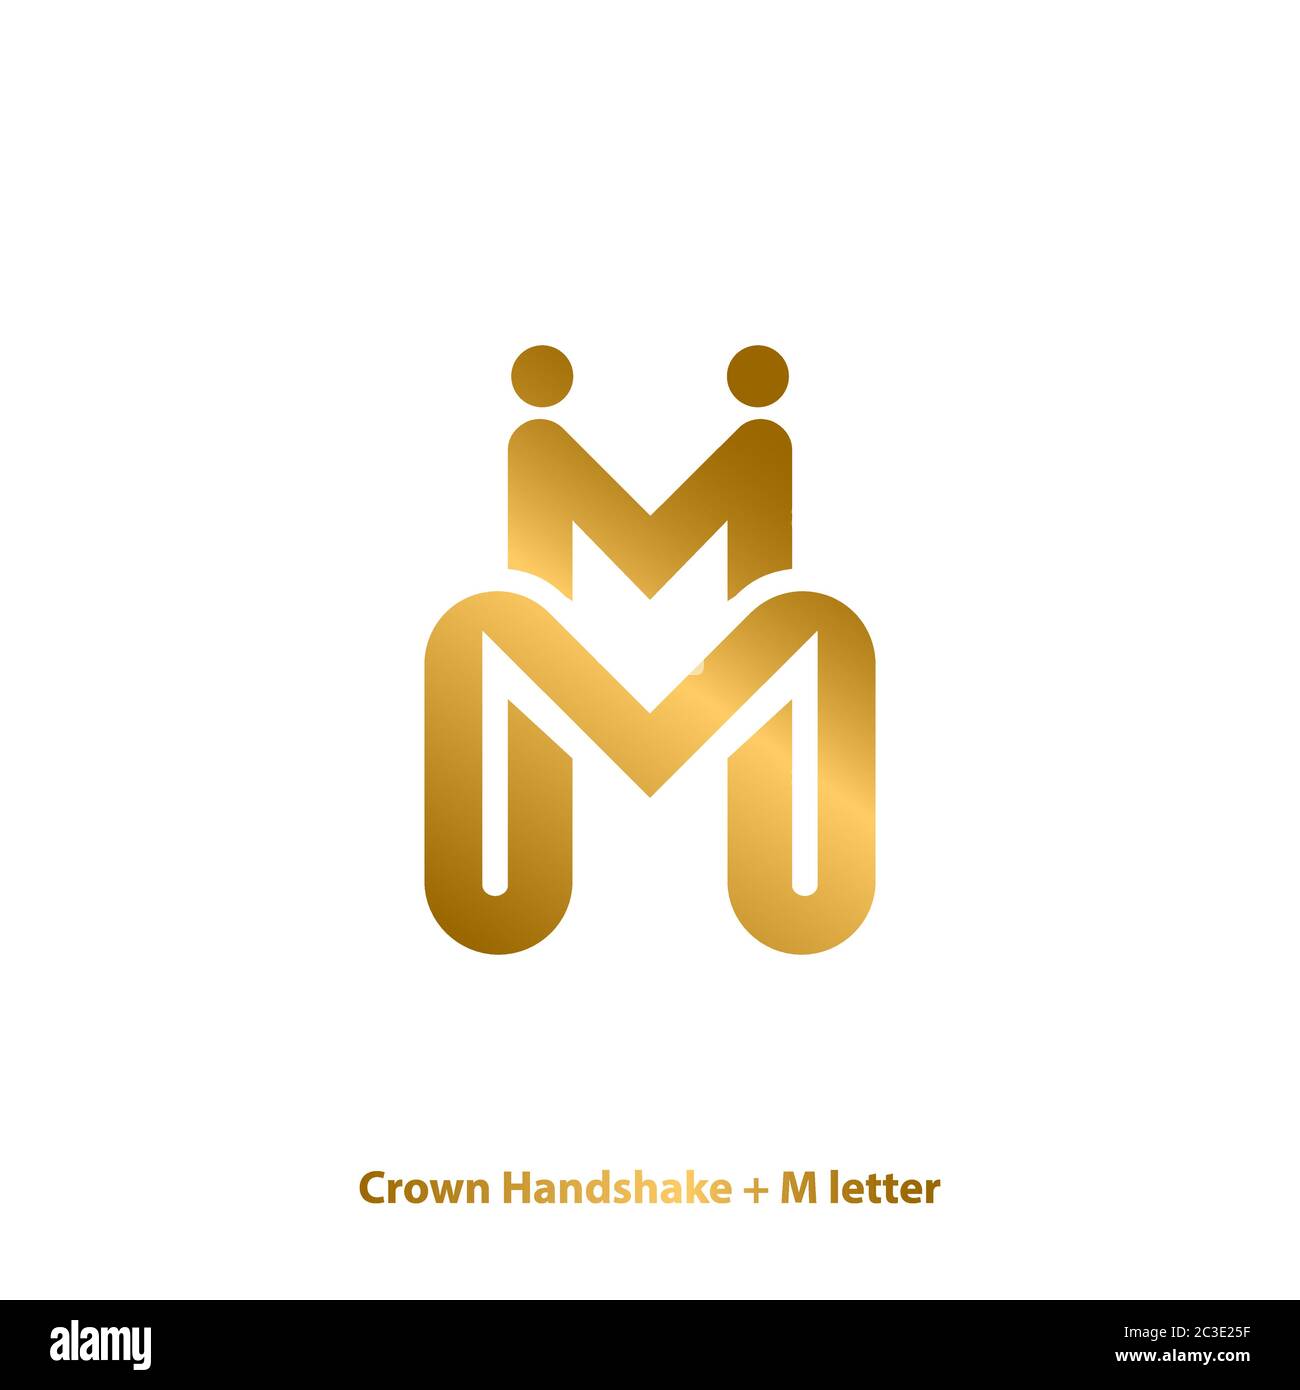 How to Design a Double M letter Logo // letter logo design illustrator cc  2017 